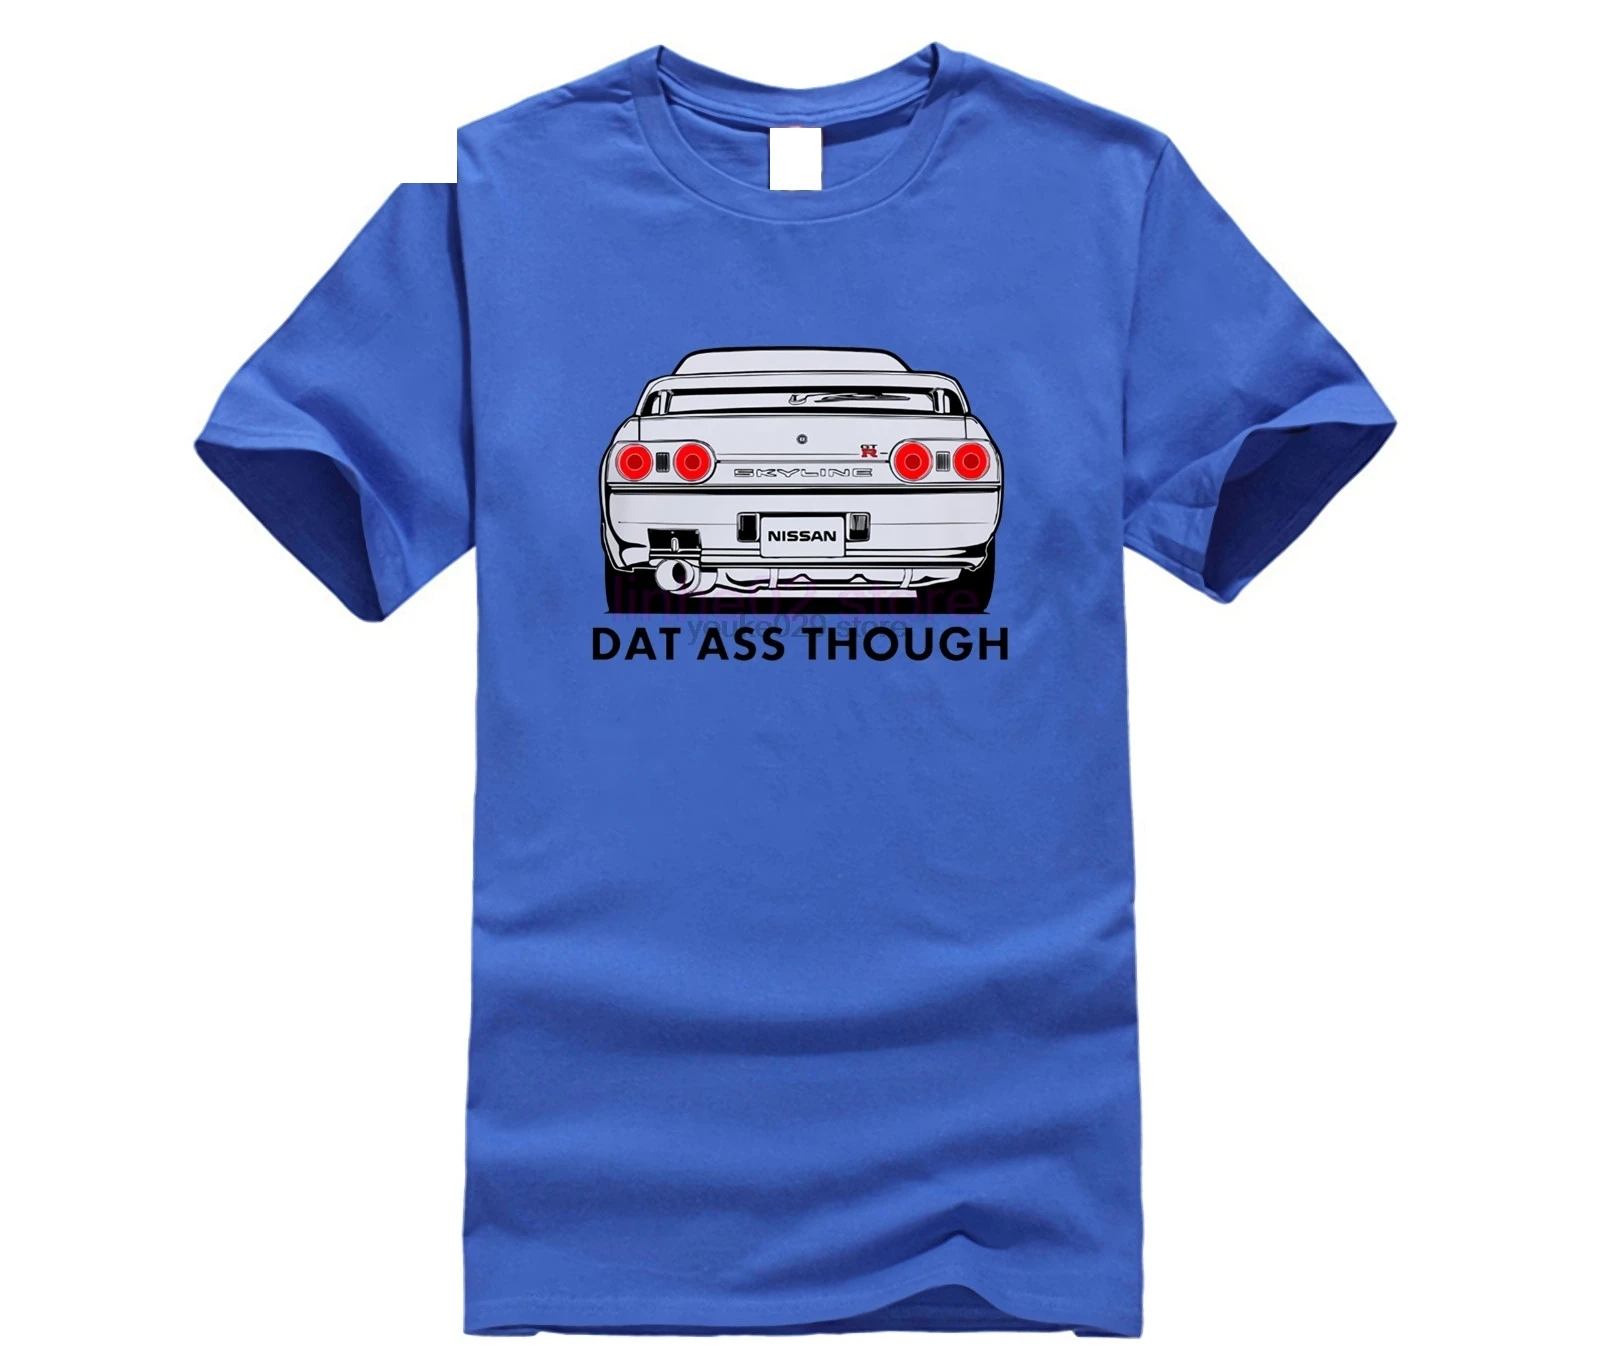 

Oversized t-shirt 100% Cotton Mens Summer Tops Tees R32 Gtr Skyline t-shirt Though Funny Turbo Racer Drift Gift Cool Tee Shirts